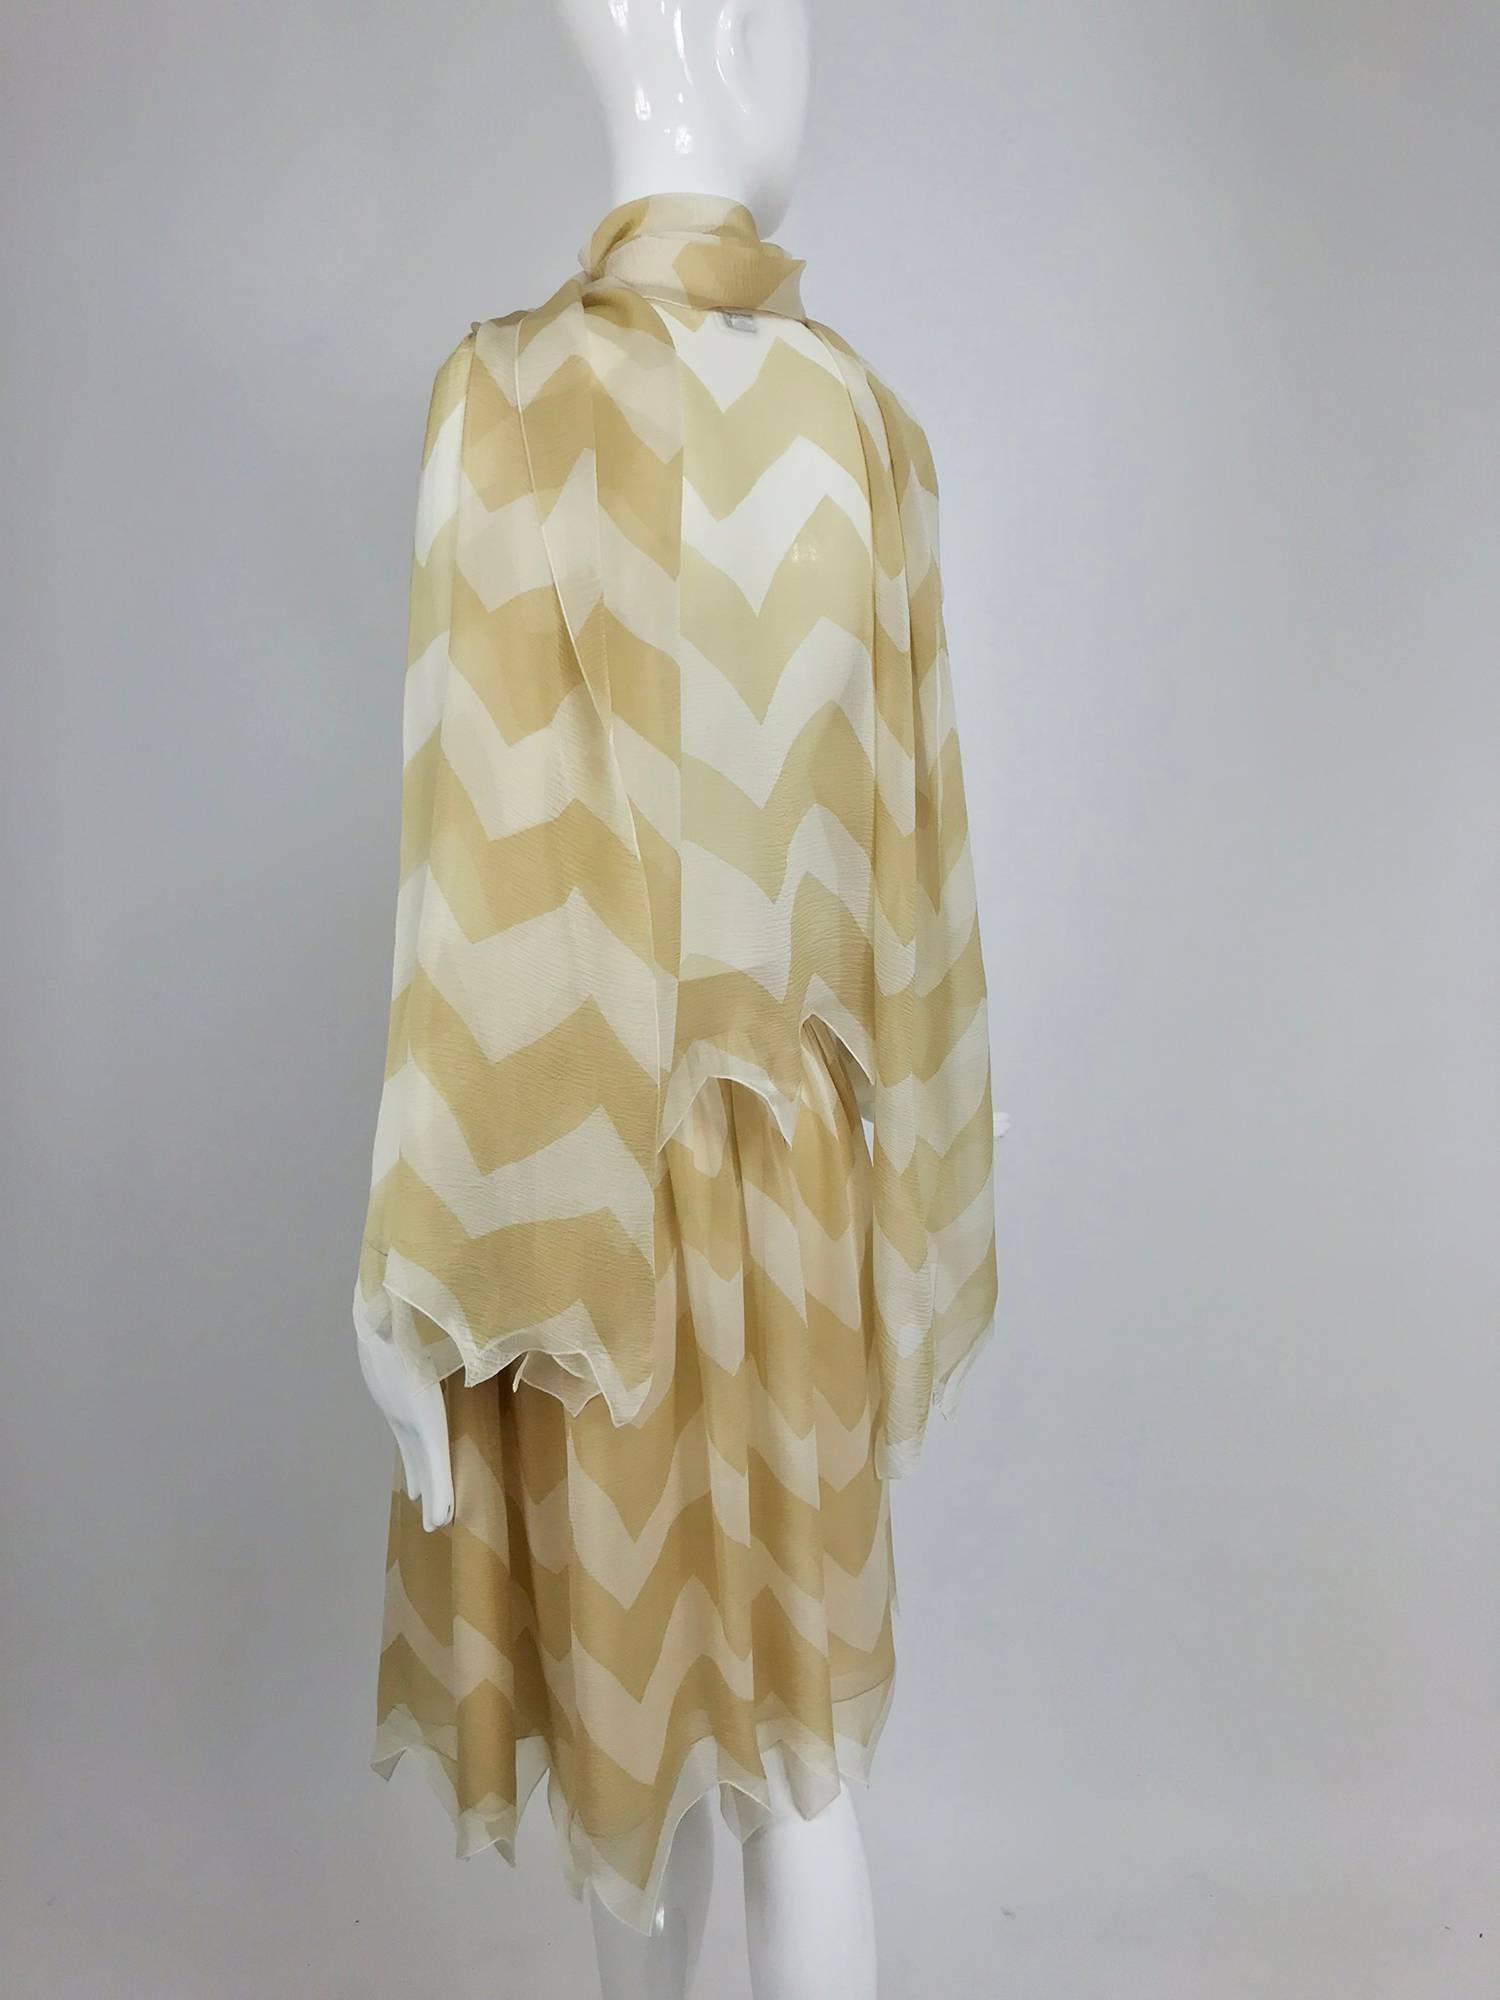 Chanel tan and cream zig zag silk chiffon blouse and skirt 2000A 2